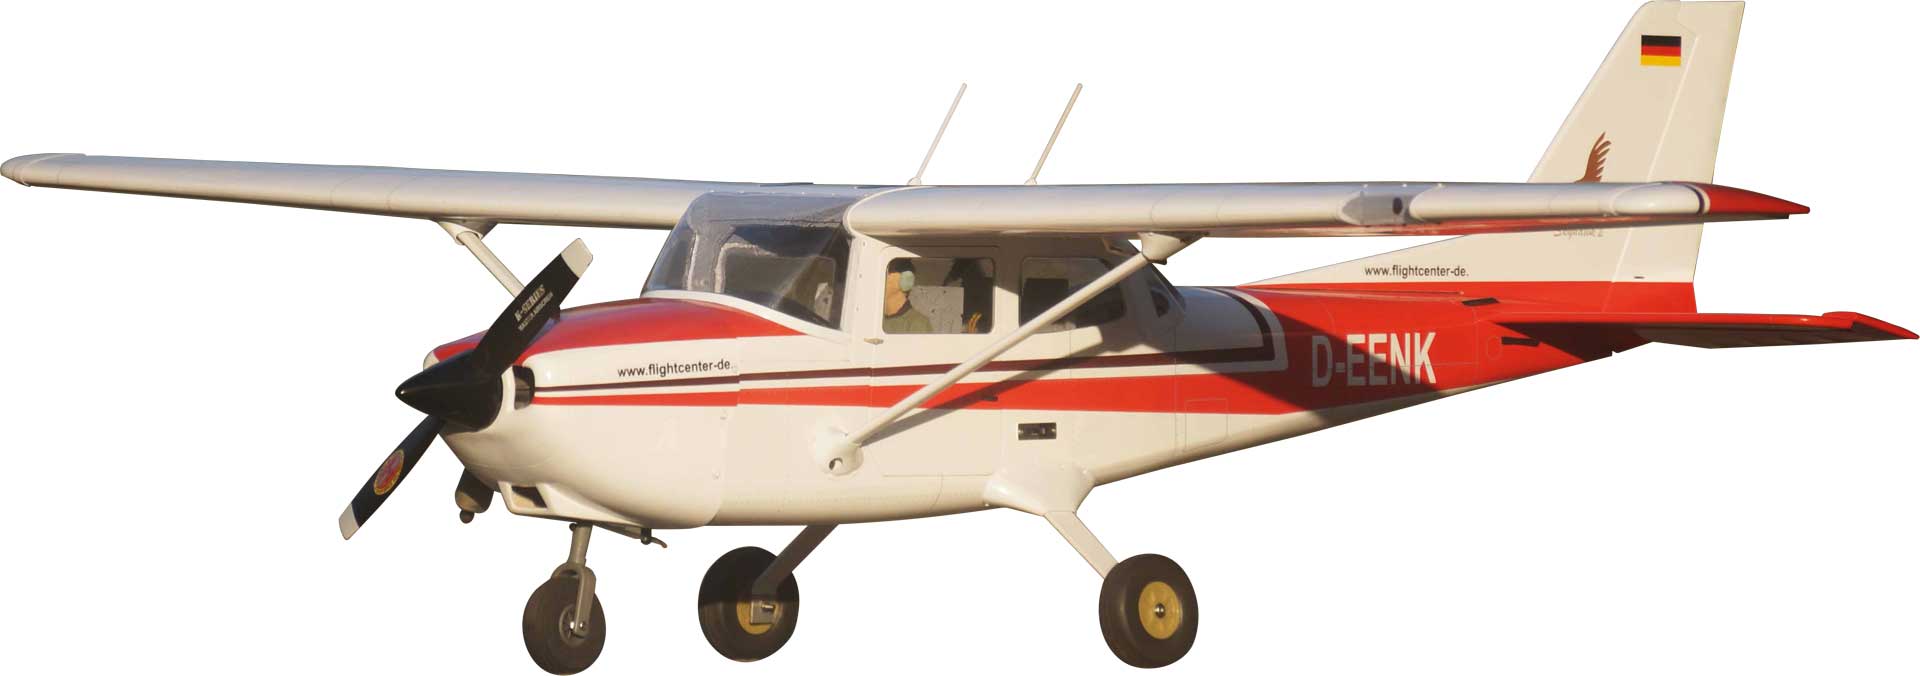 VQ Models Cessna 172 Skyhawk / 1730 mm ARF